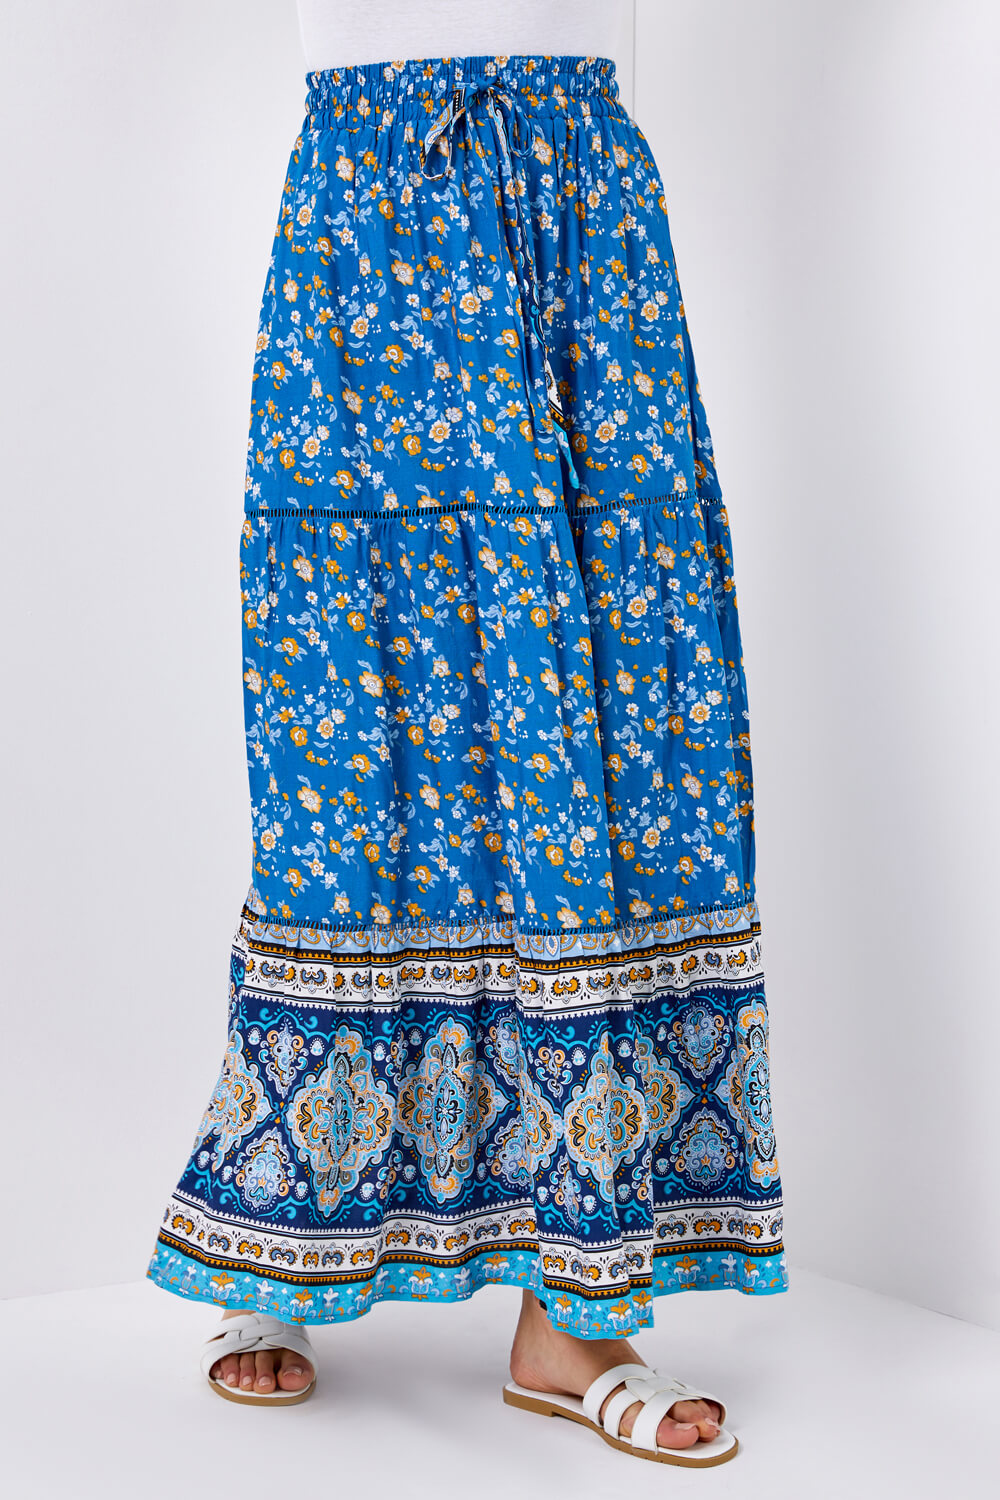 Tiered Floral Print Maxi Skirt in Blue - Roman Originals UK